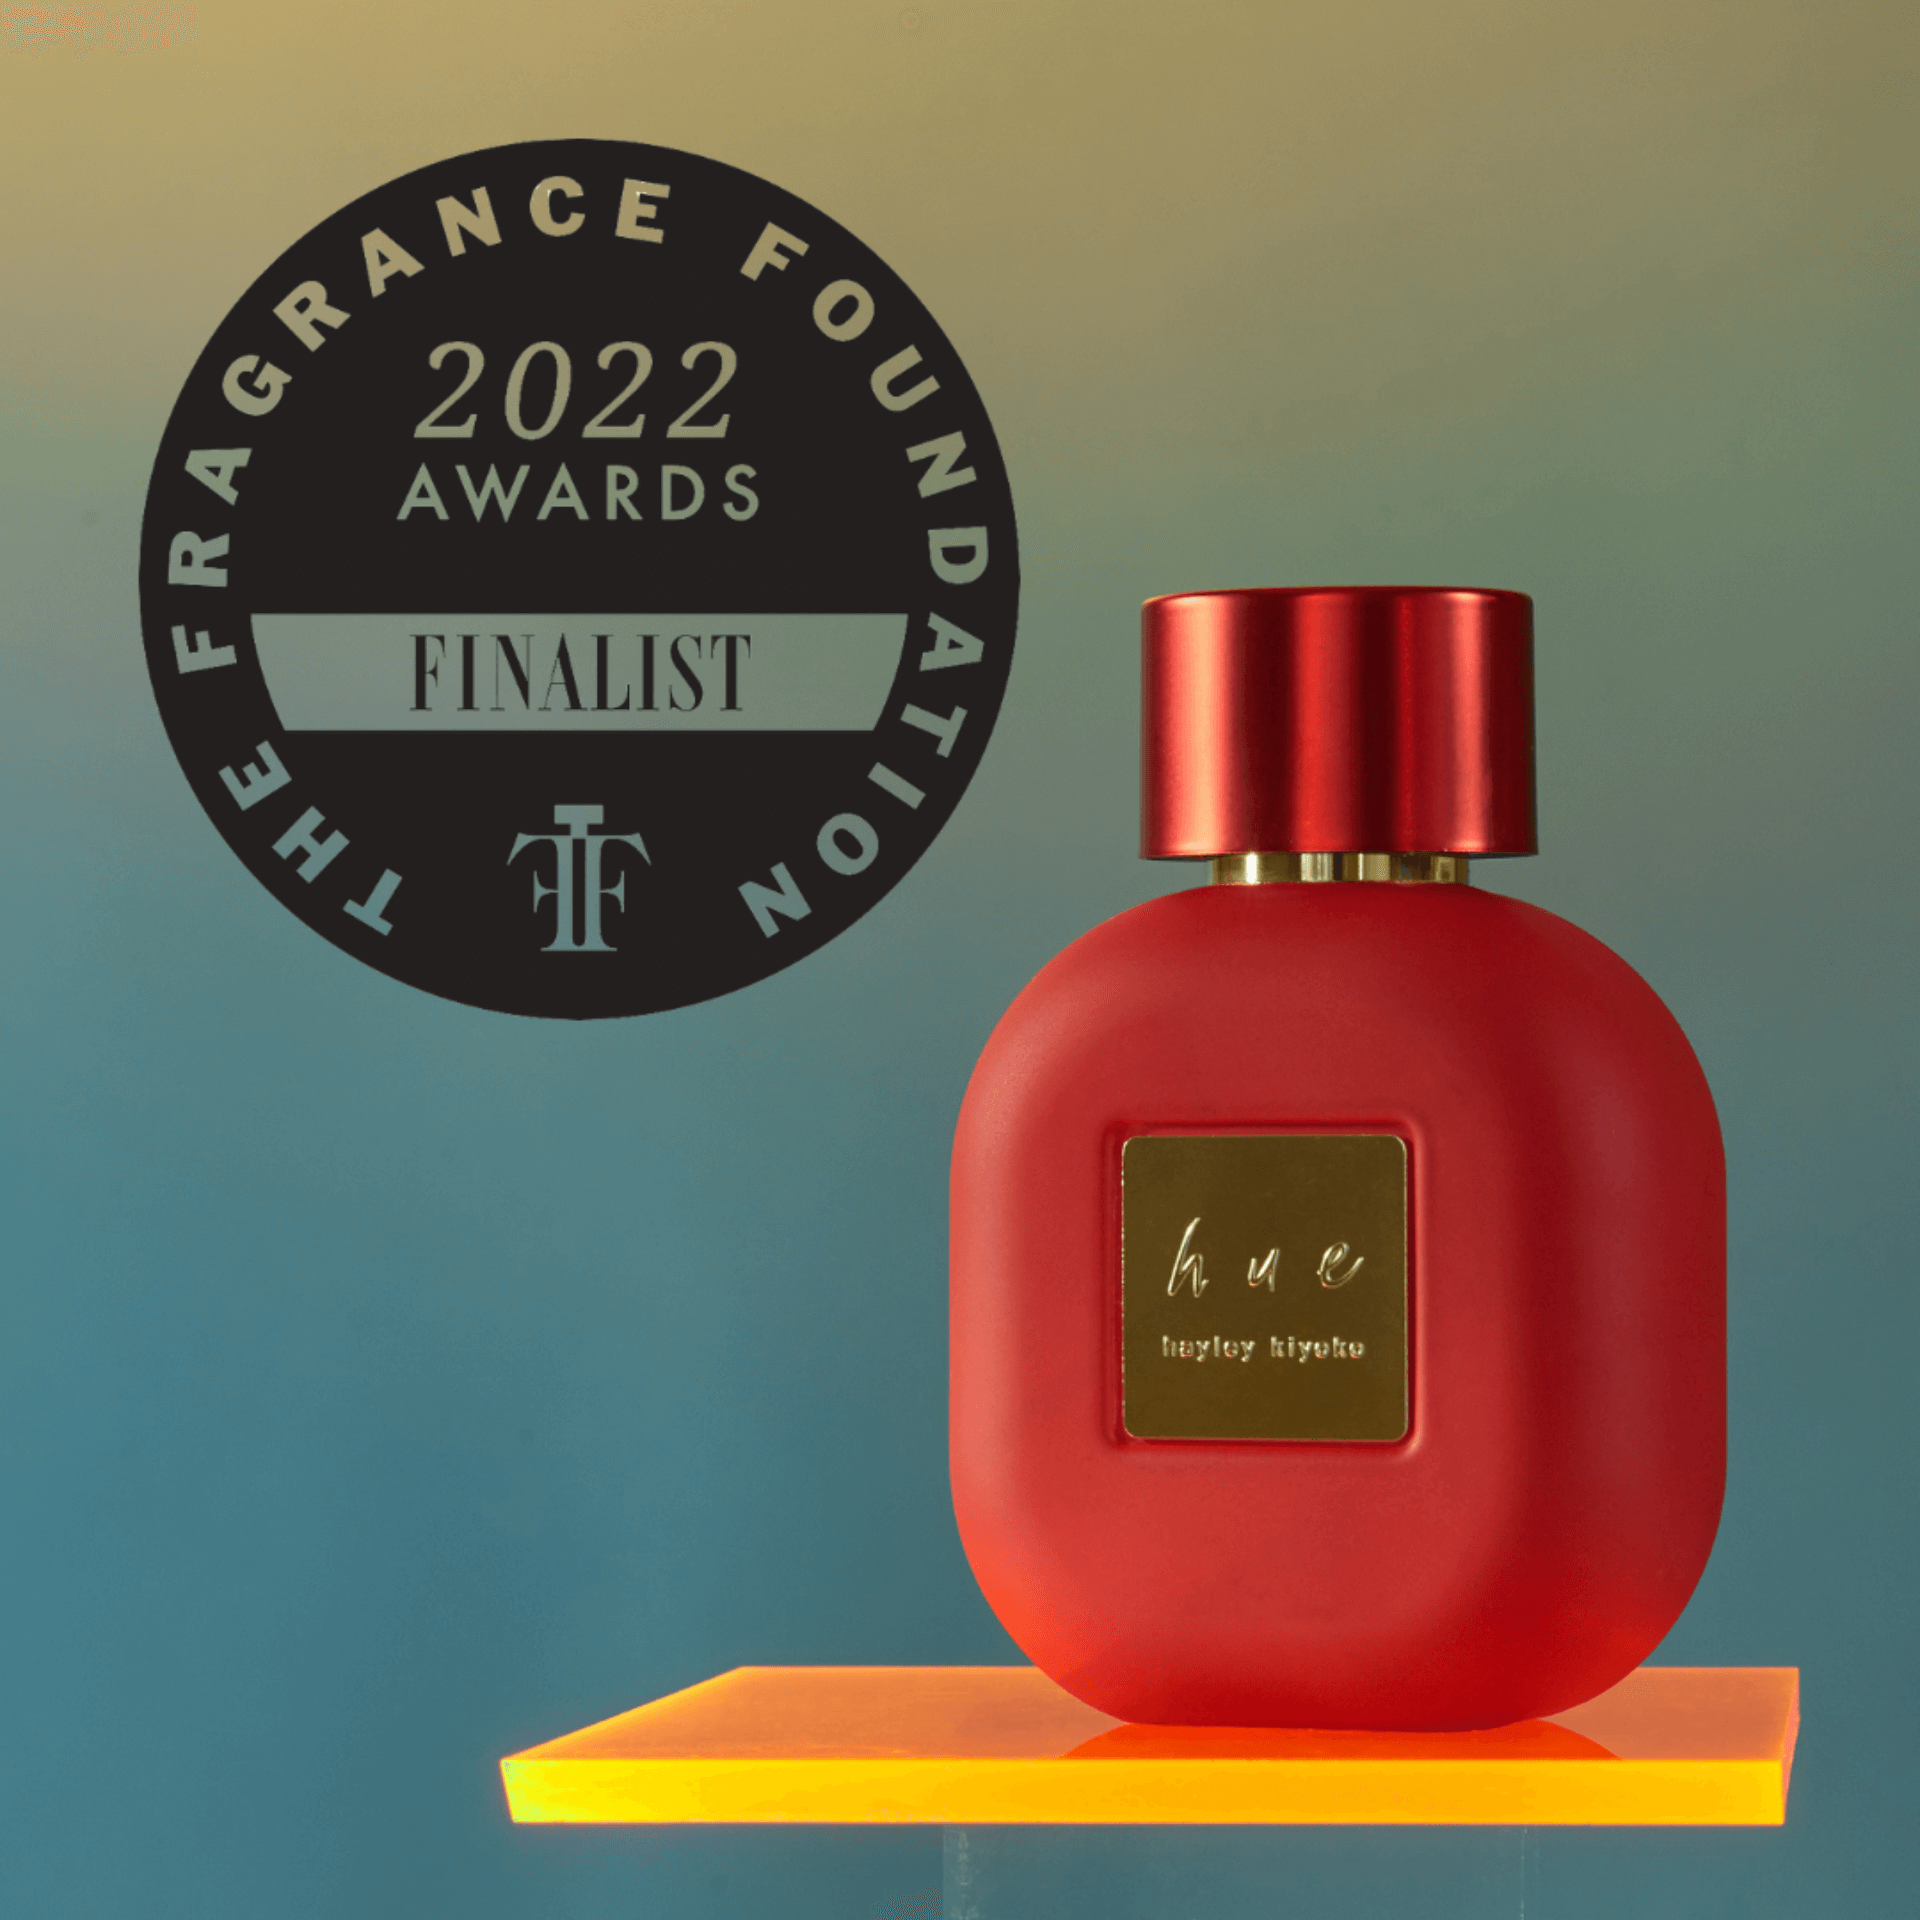 Hue by Hayley perfume, created by pop-star Hayley Kiyoko, displayed on a floating shelf.